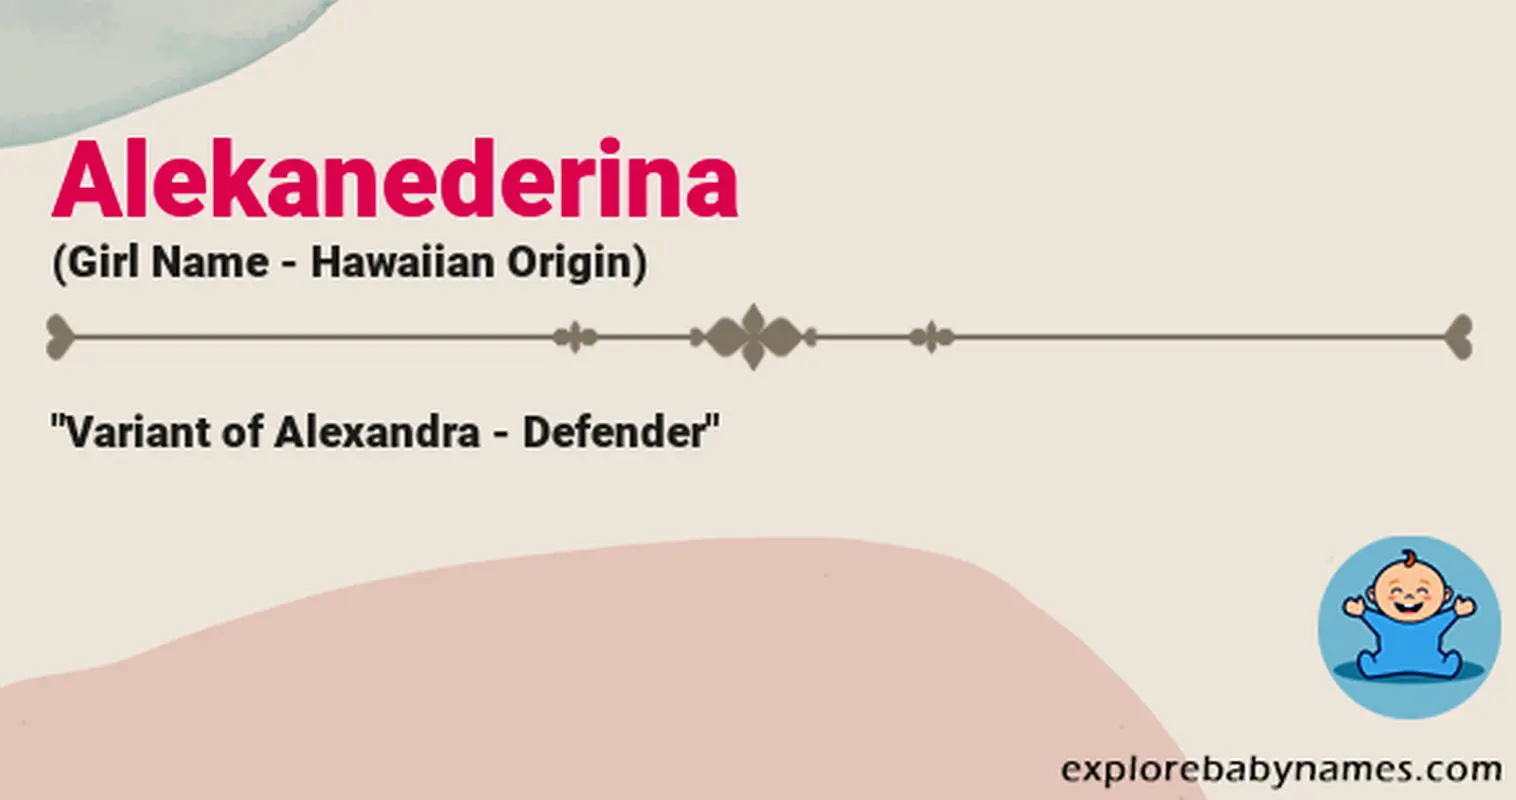 Meaning of Alekanederina